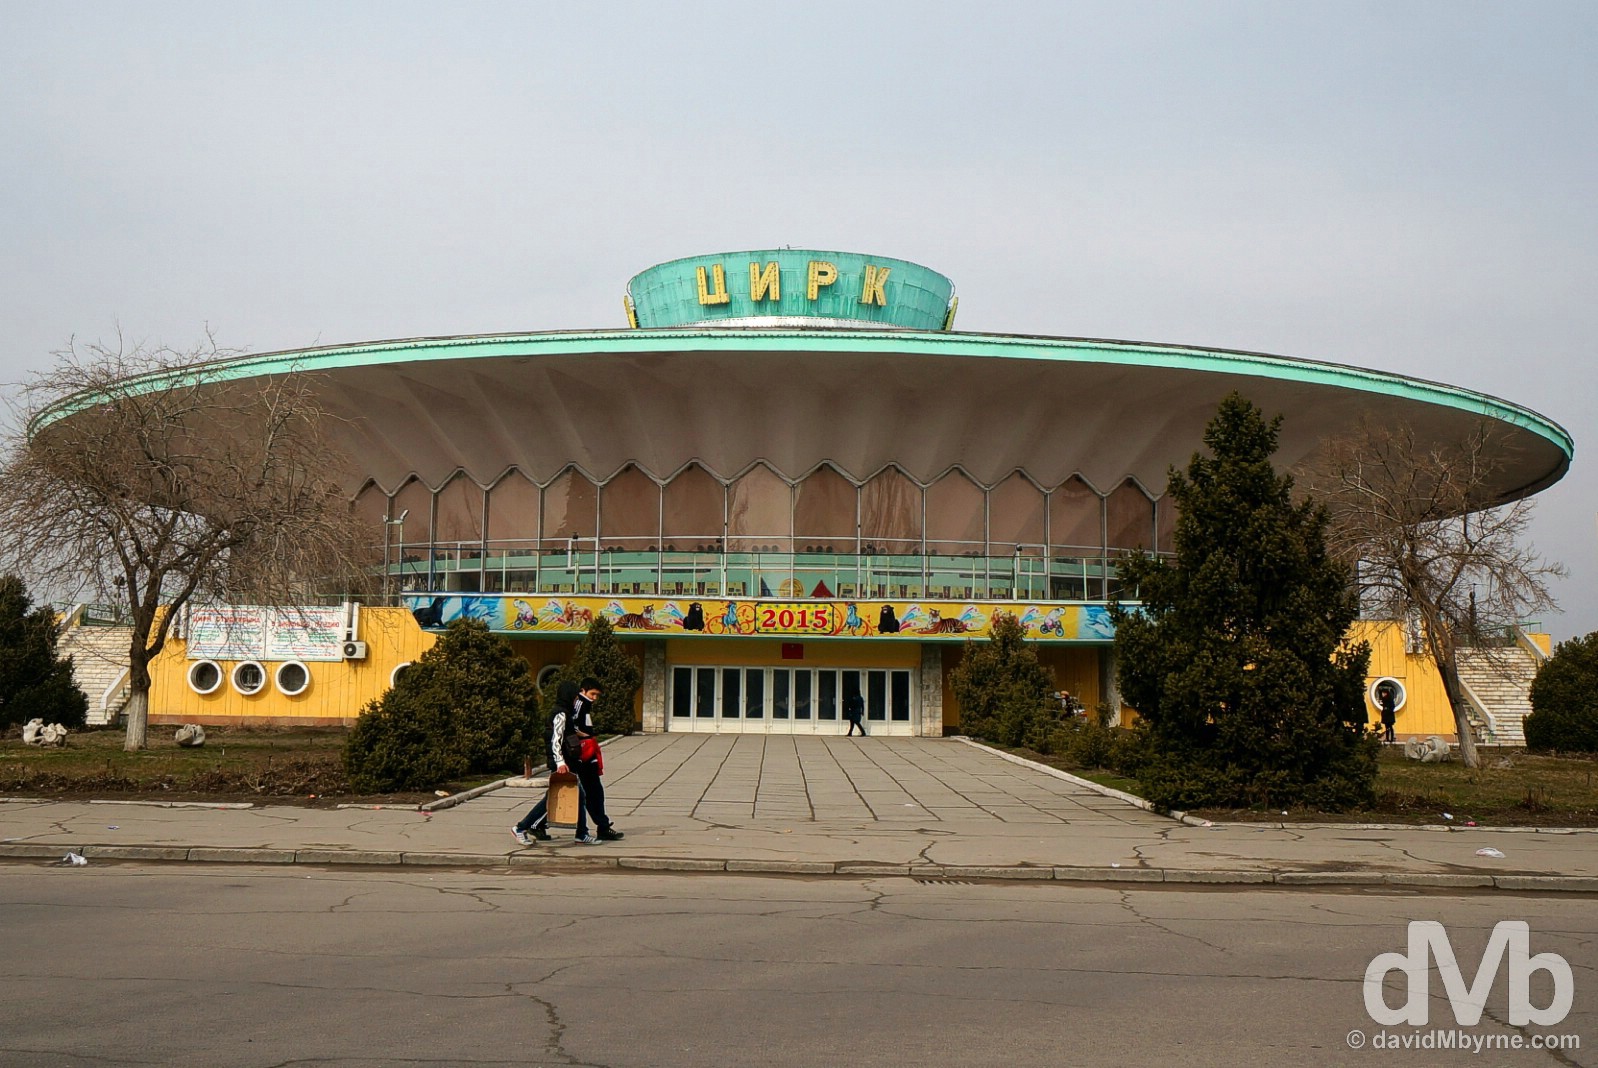 The Circus building in Bishkek, Kyrgyzstan. February 23, 2015.